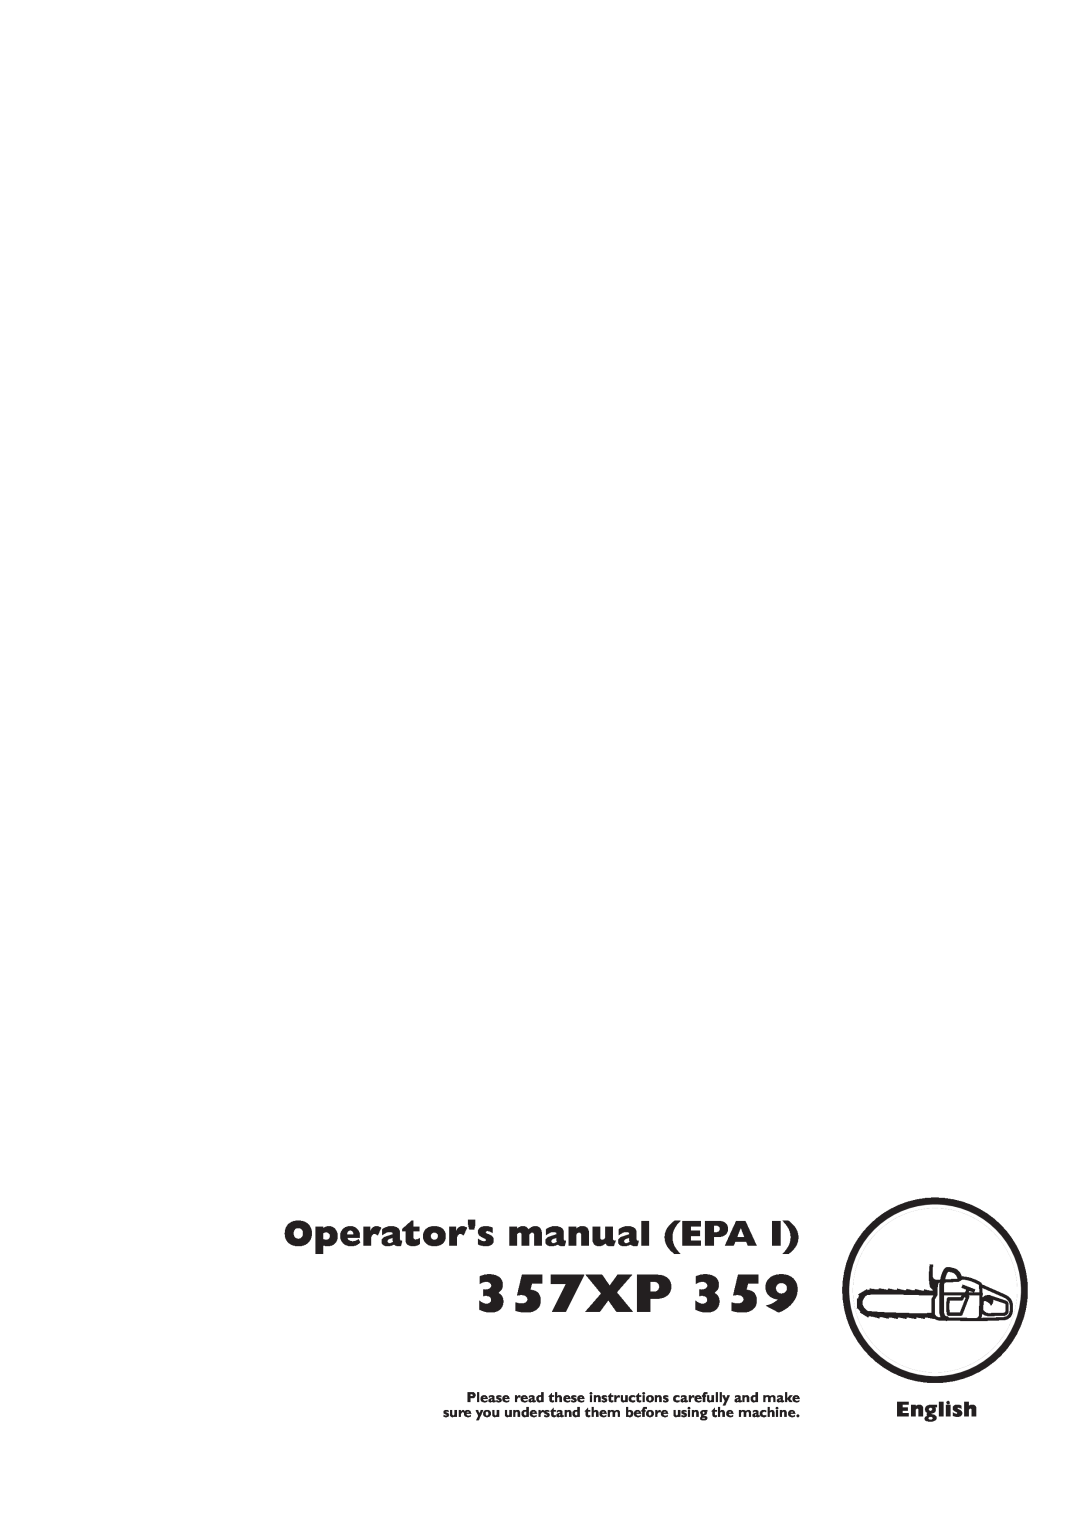 Husqvarna 359 manual English, 357XP, Operators manual EPA 